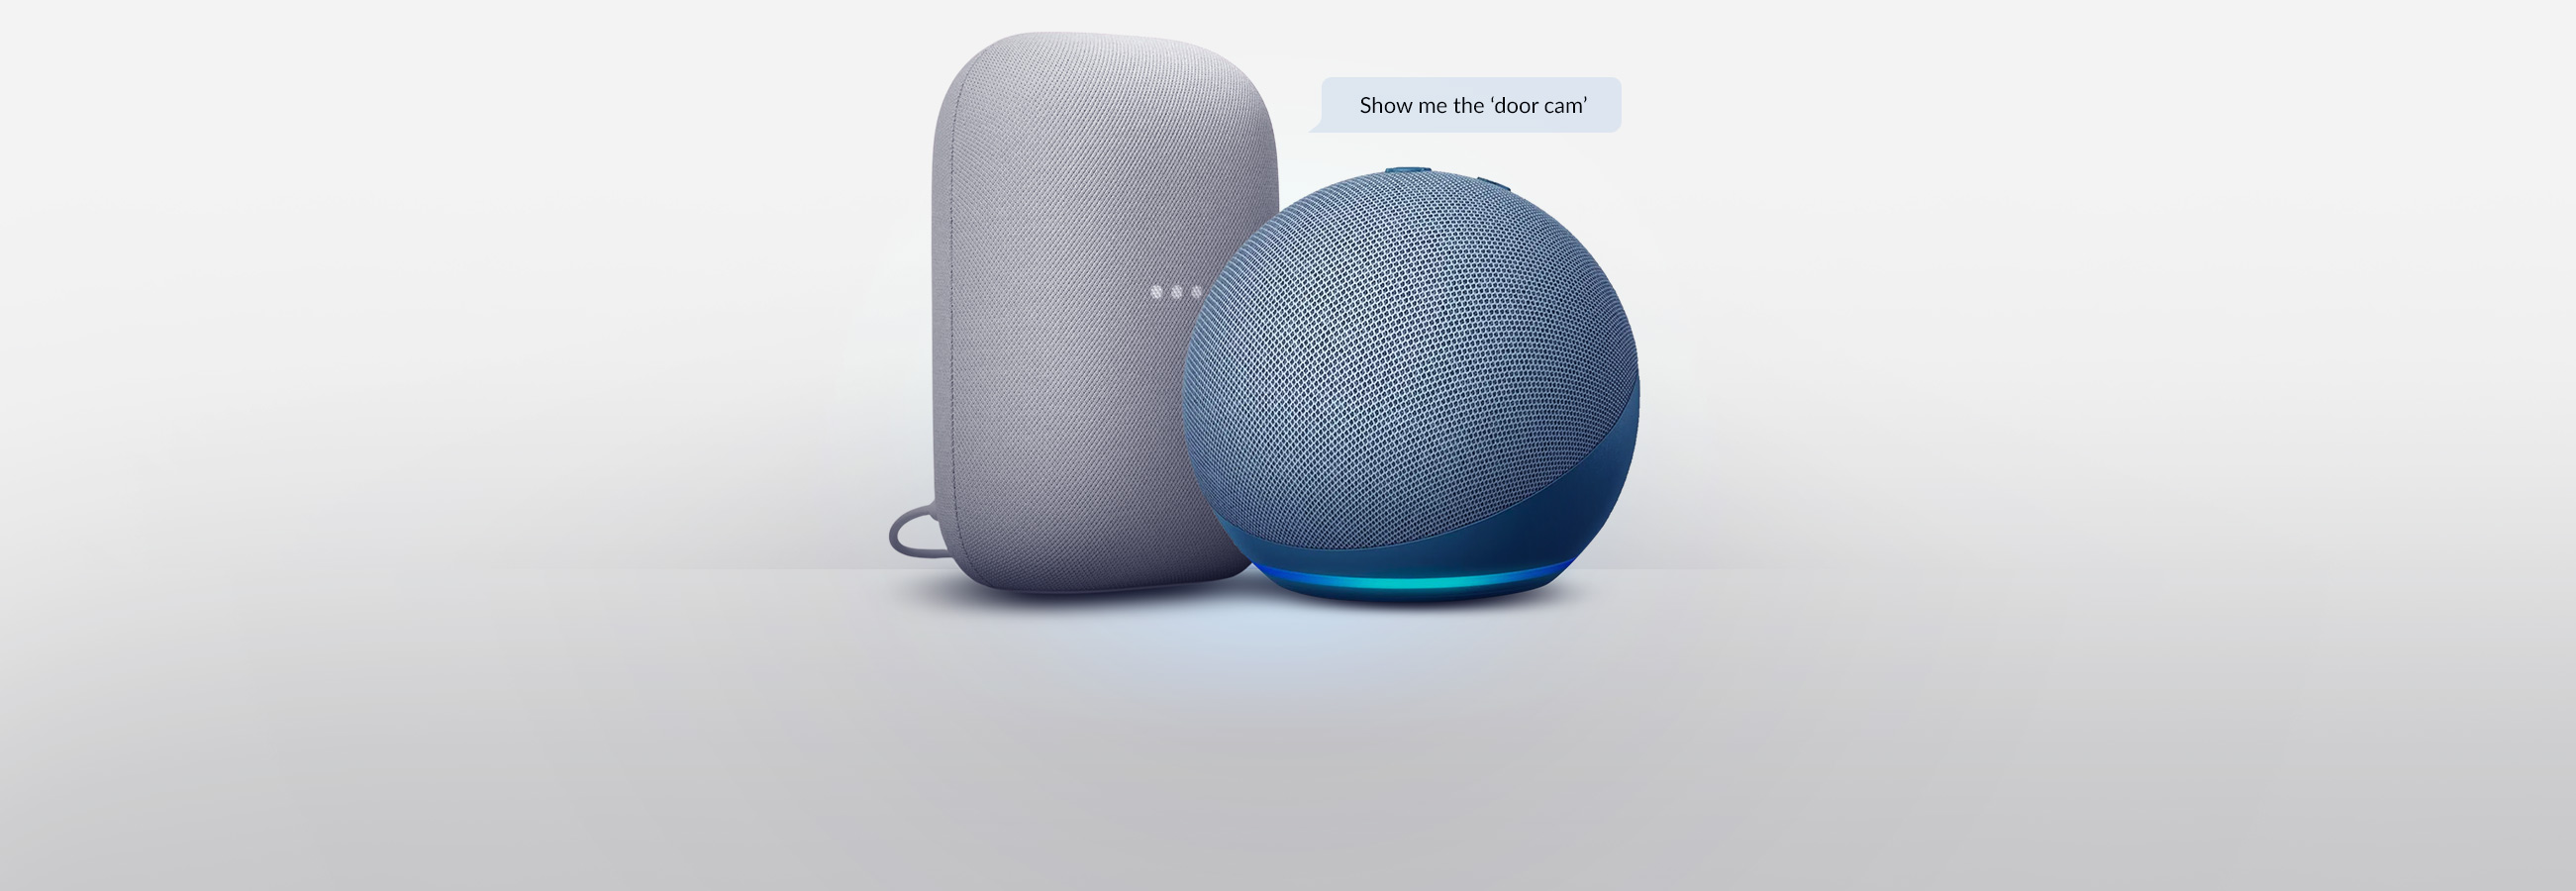 Google Nest Audio and Amazon Echo Dot (4th Gen).